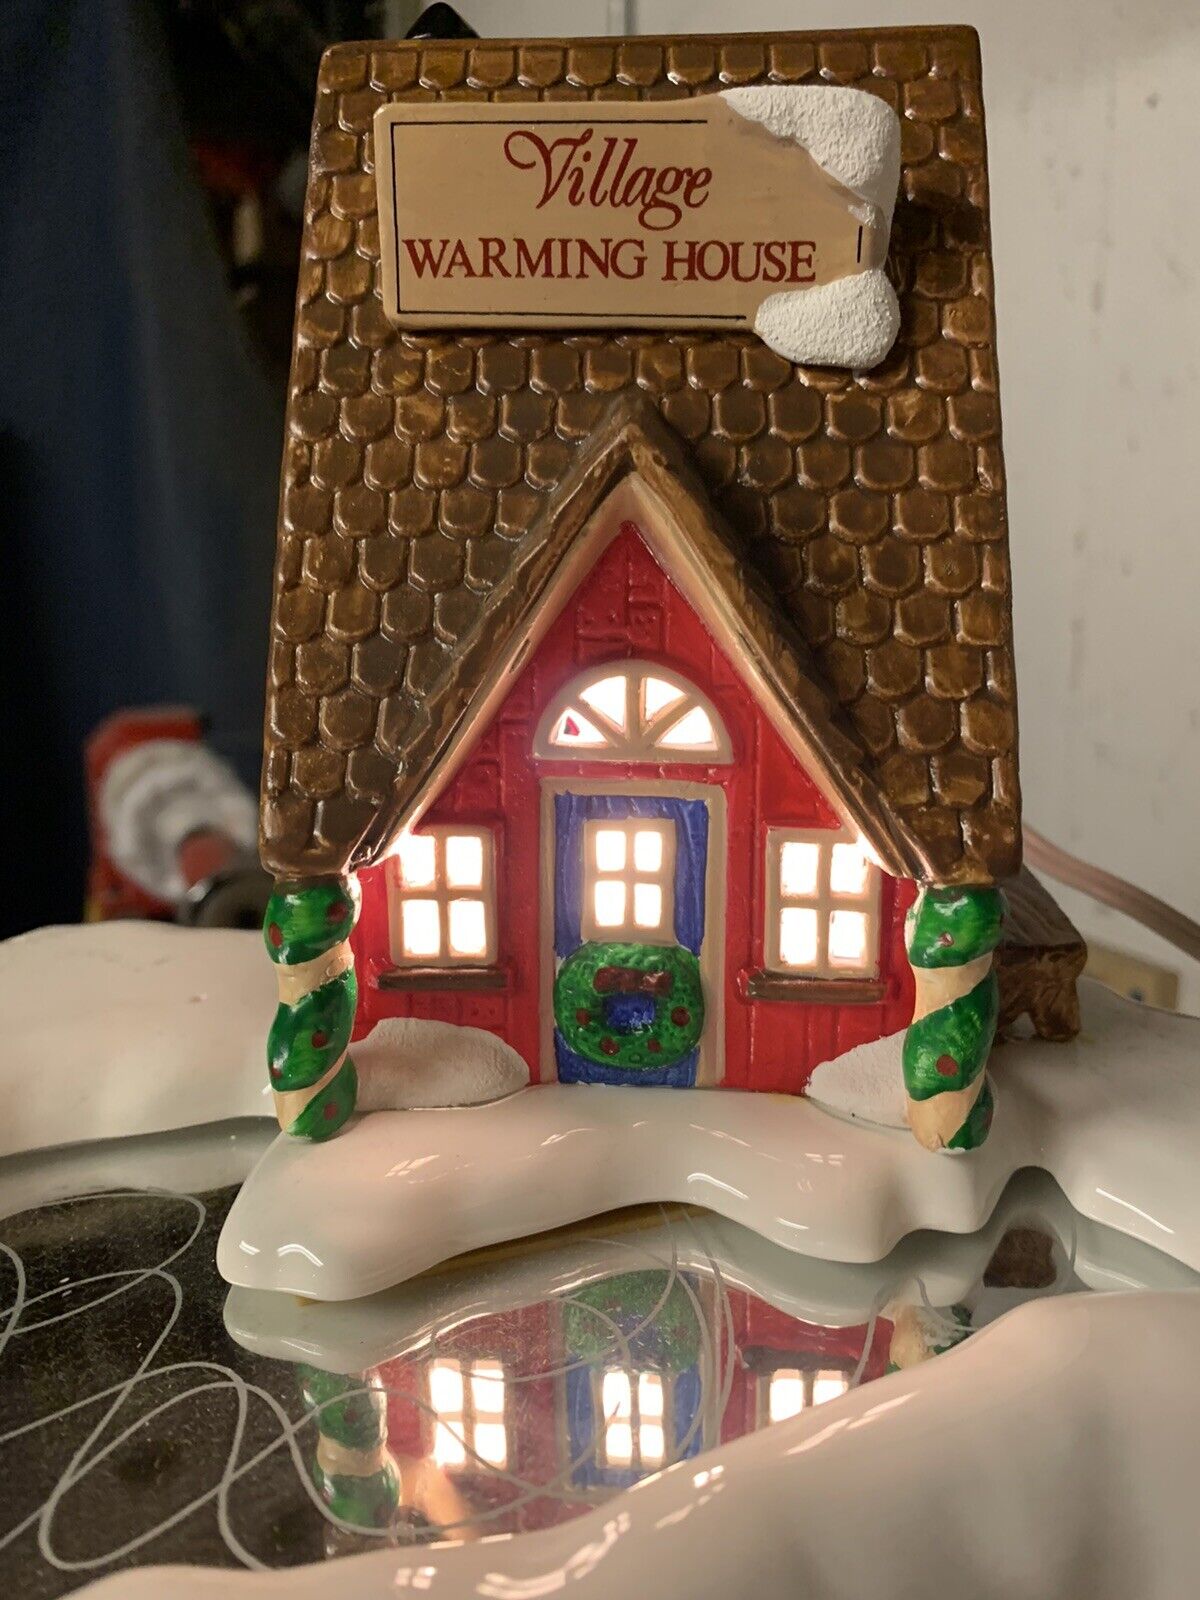 Snow Village Department 56 Warming house Christmas Holiday Decor Mantle Shelf